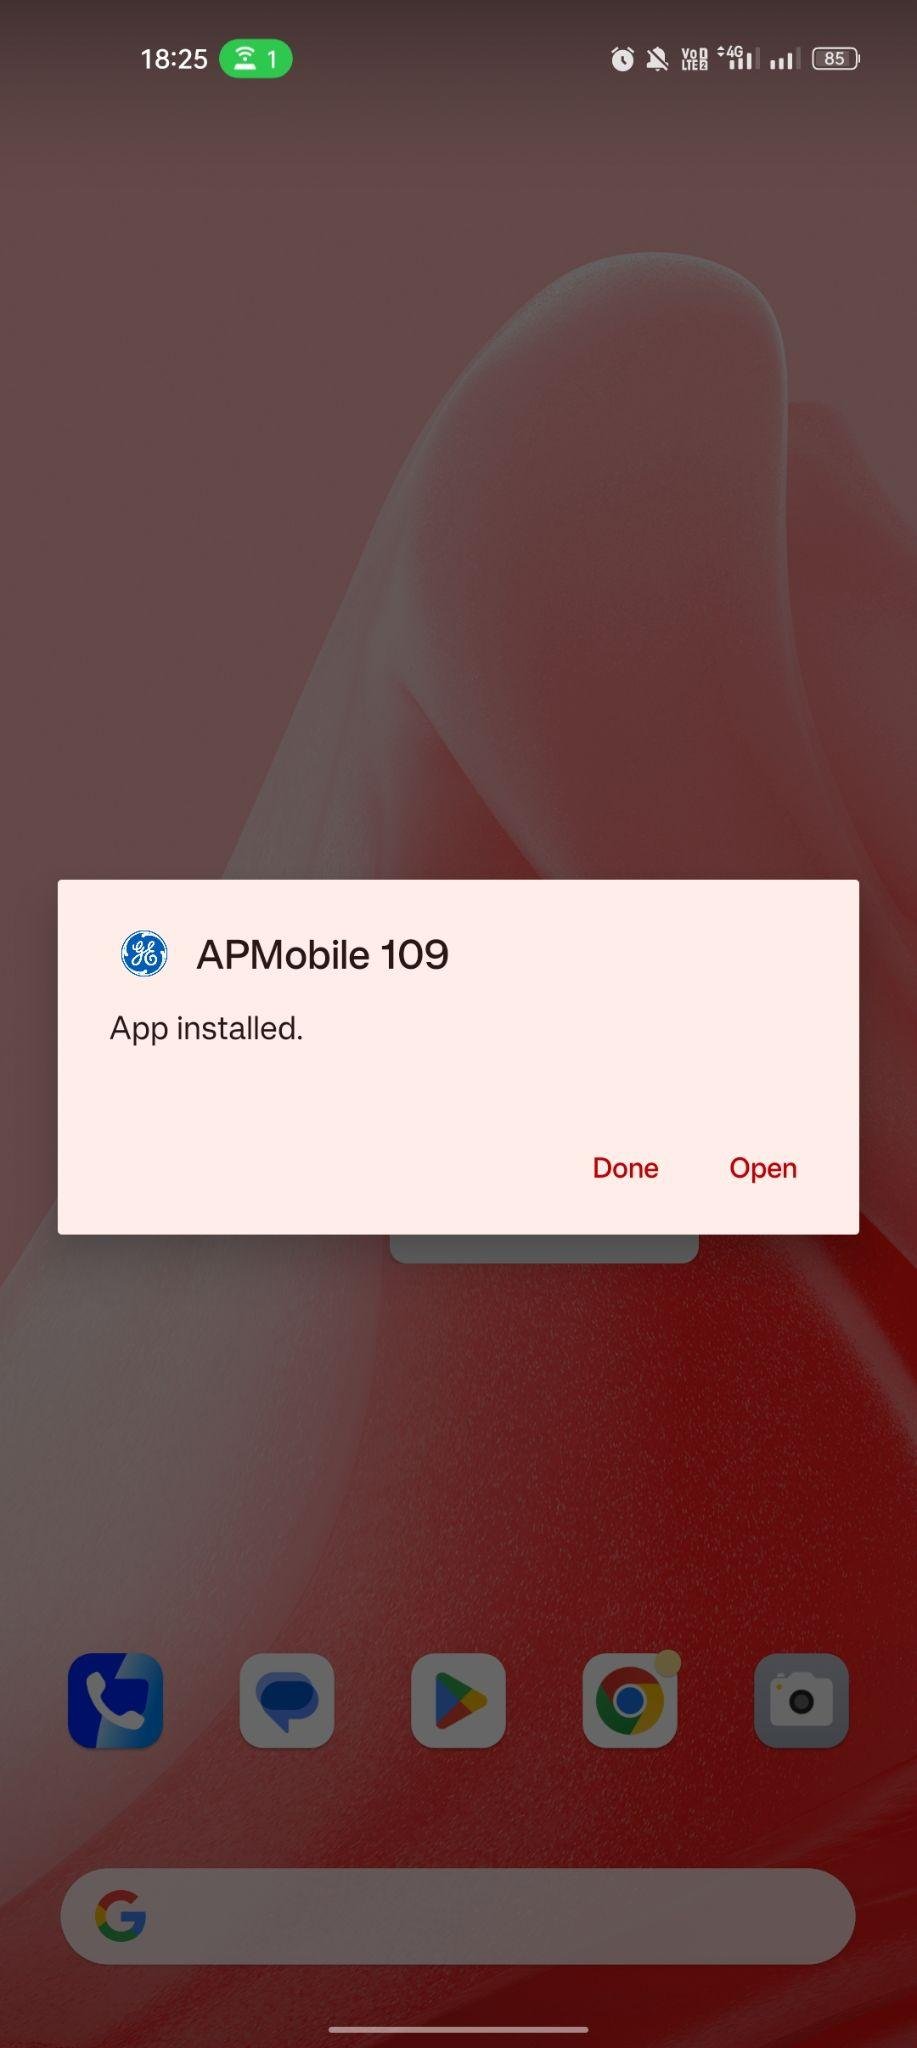 AP Mobile 109 apk installed